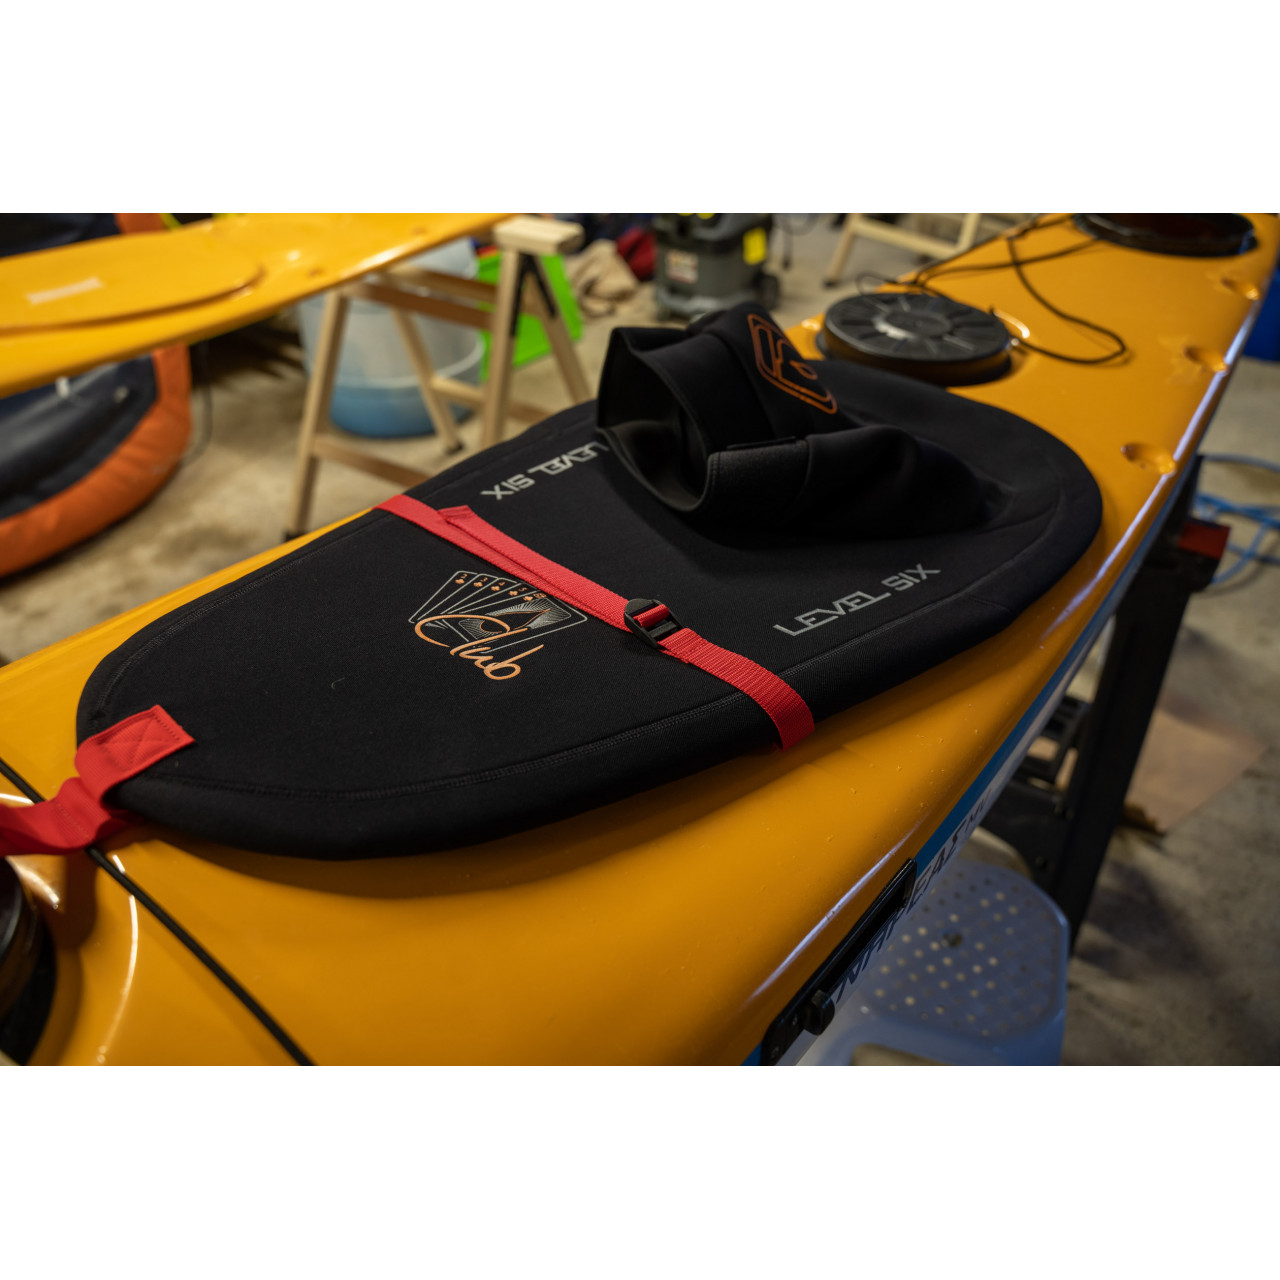 Sea Kayak Heavy Duty Neoprene SKirt